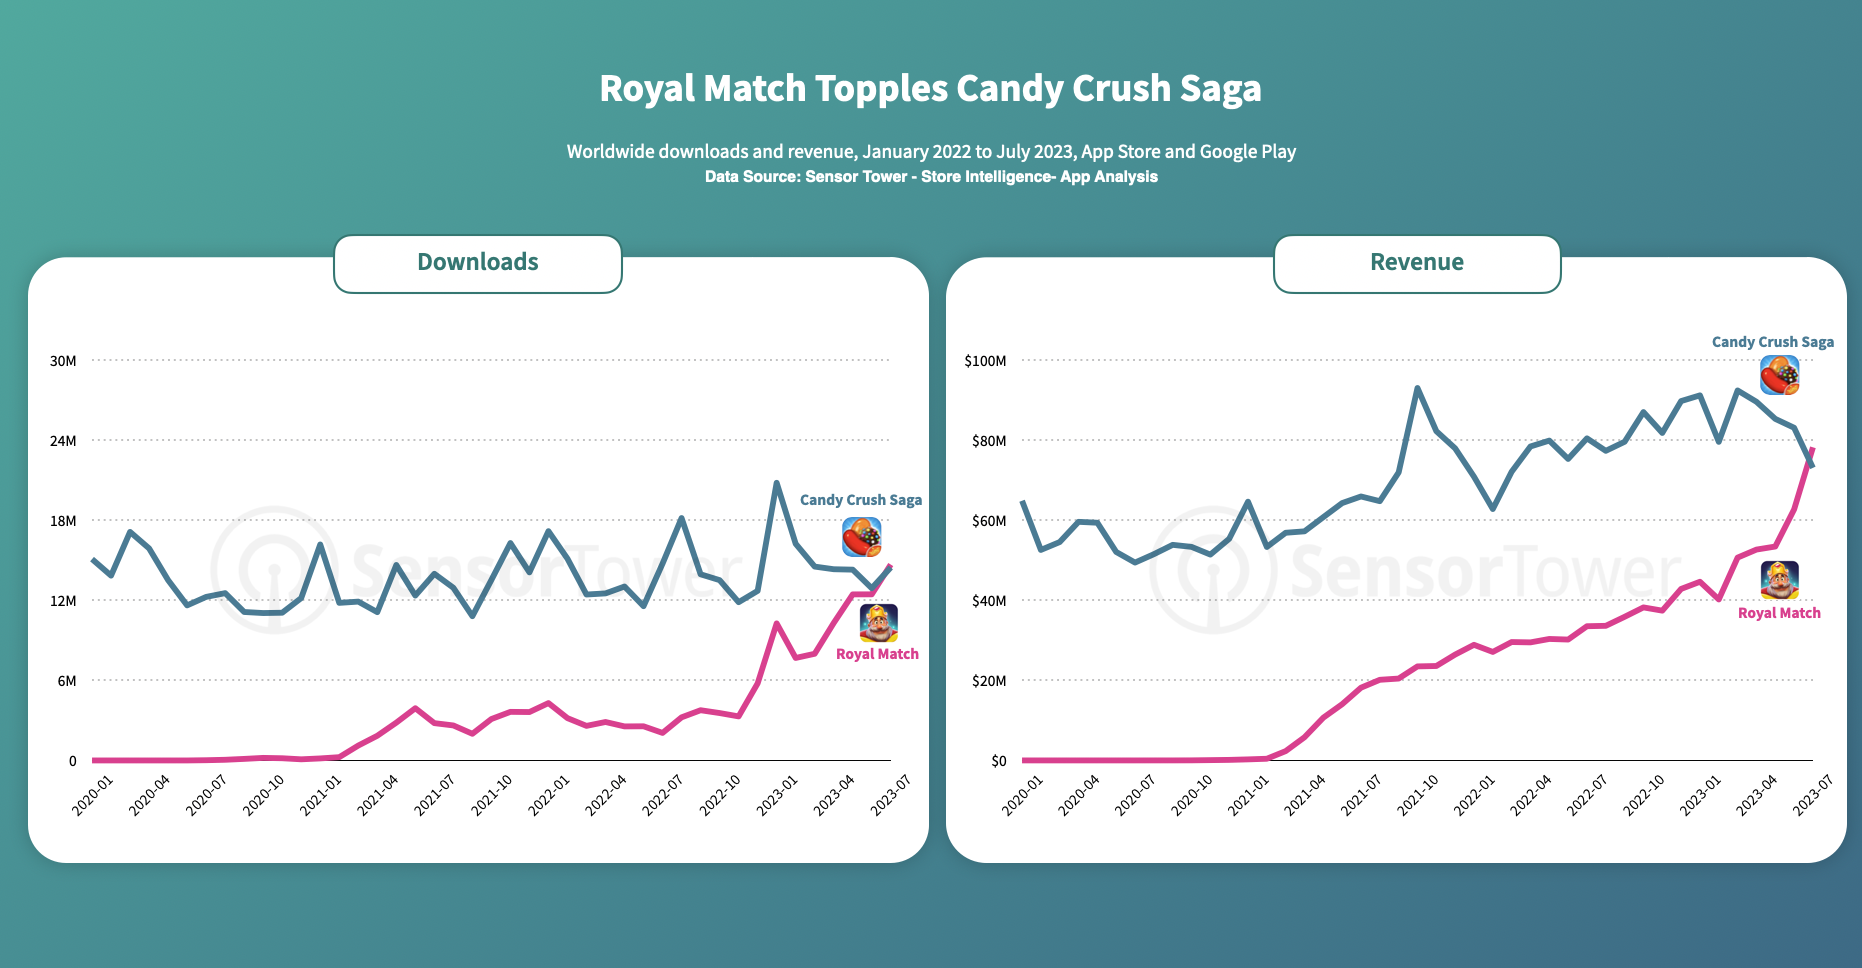 Royal Match Topples Candy Crush Saga